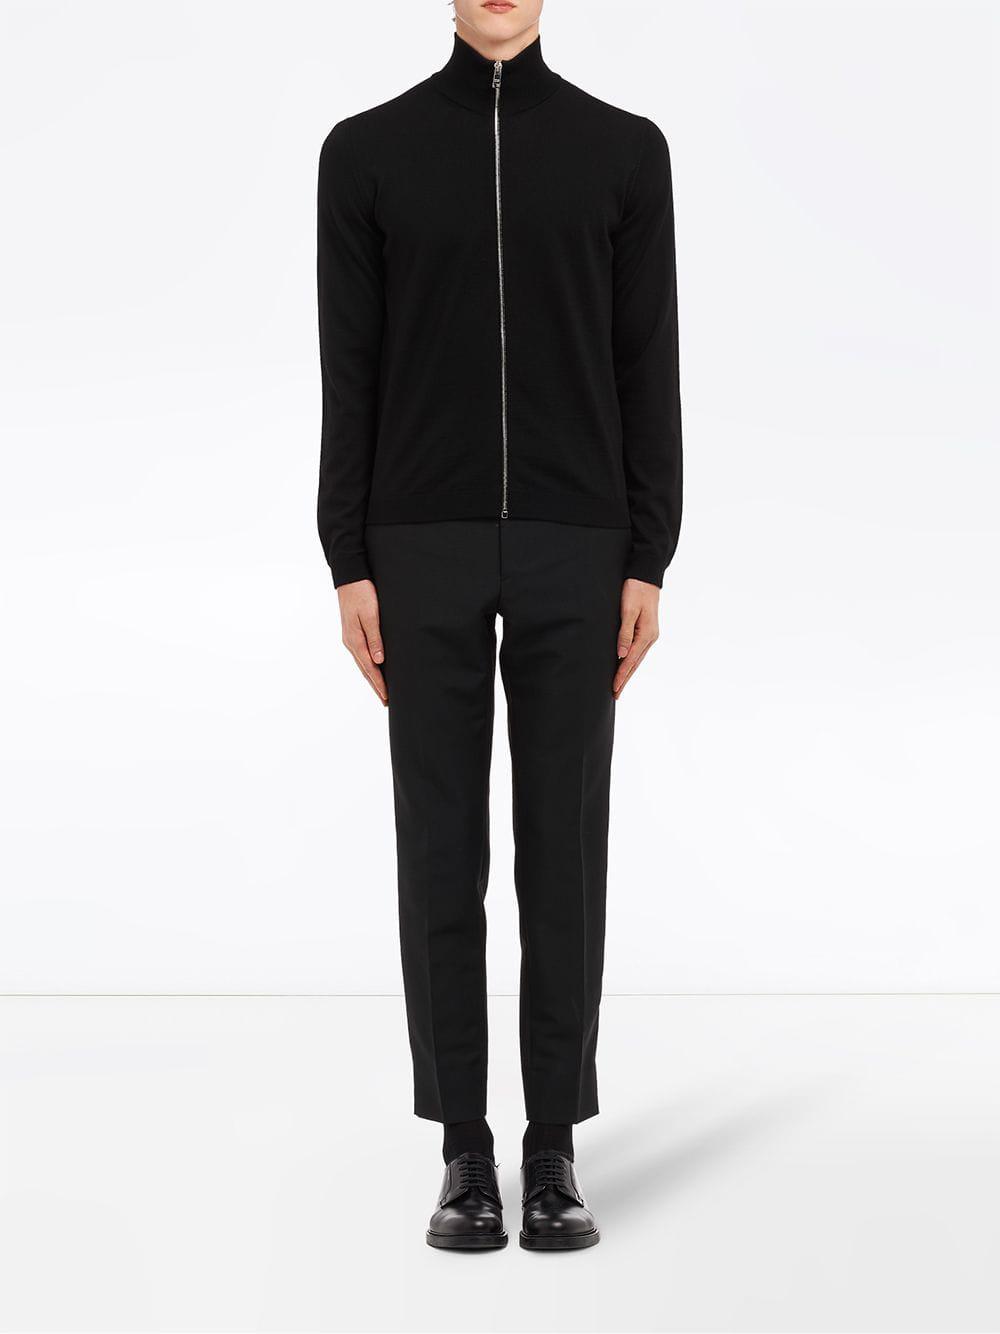 Prada Wool High Neck Zip Front Cardigan in Black for Men - Save 20% - Lyst